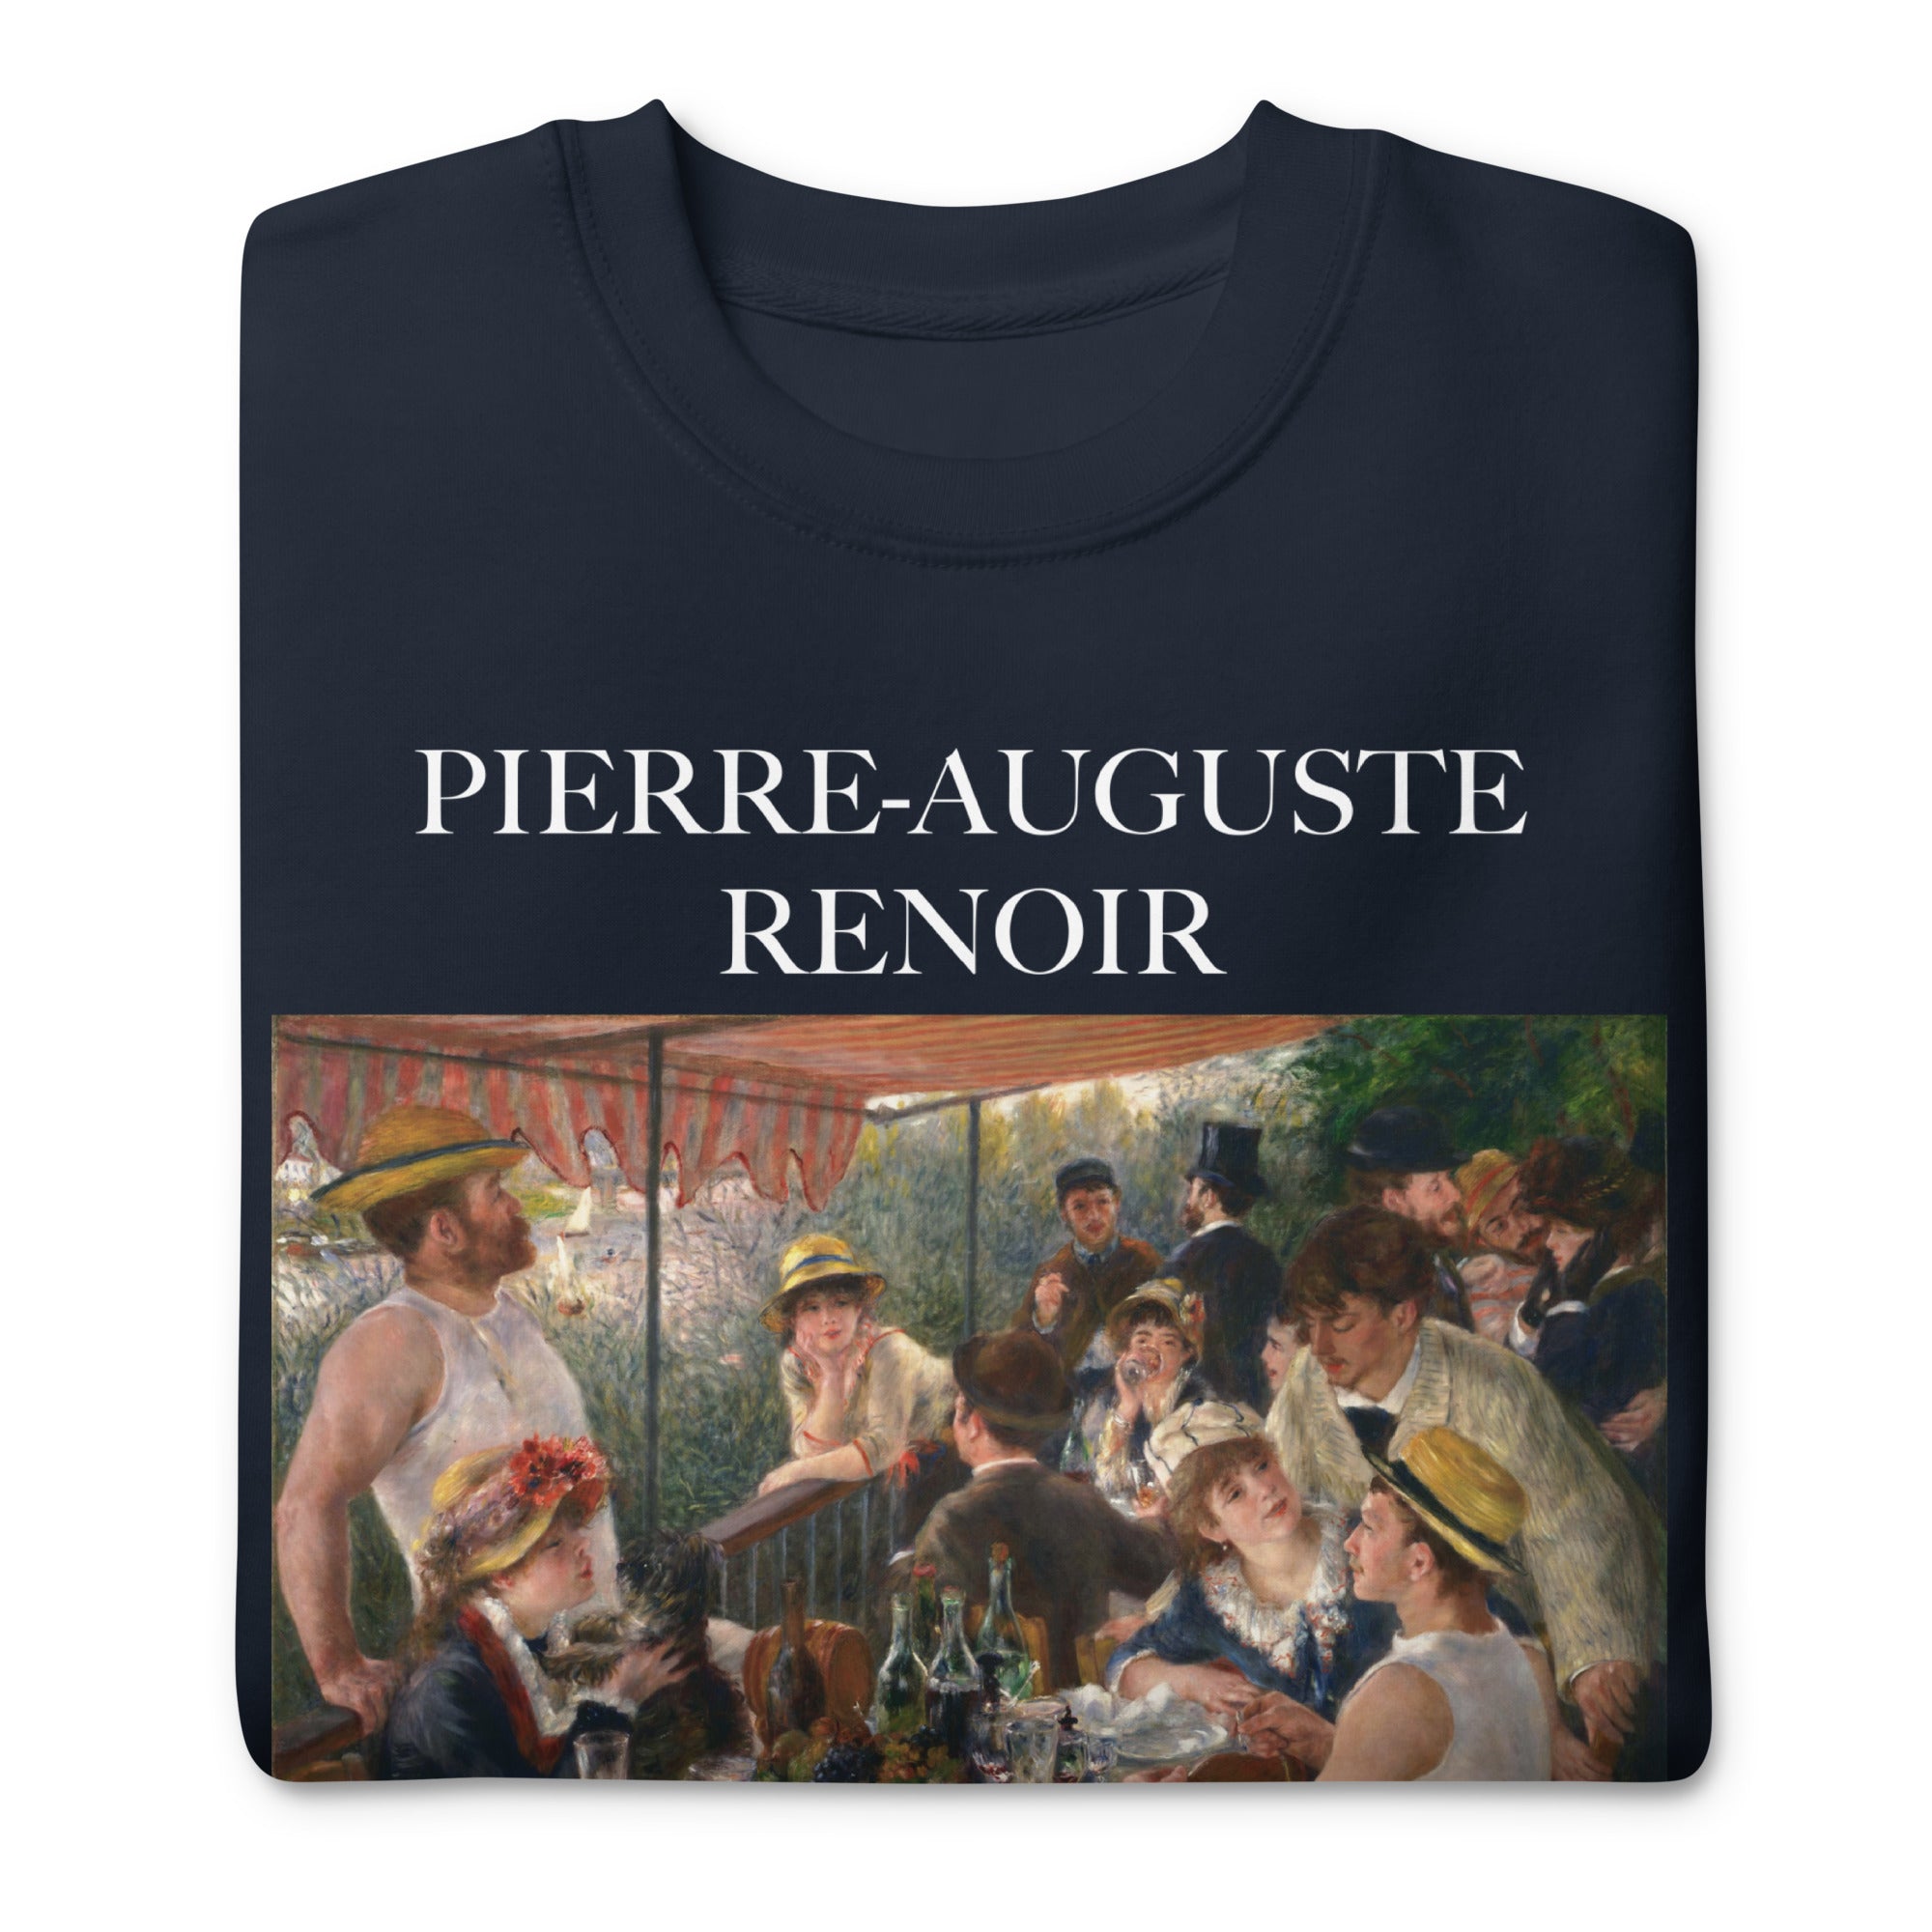 Pierre-Auguste Renoir 'The Luncheon of the Boating Party' Famous Painting Sweatshirt | Unisex Premium Sweatshirt